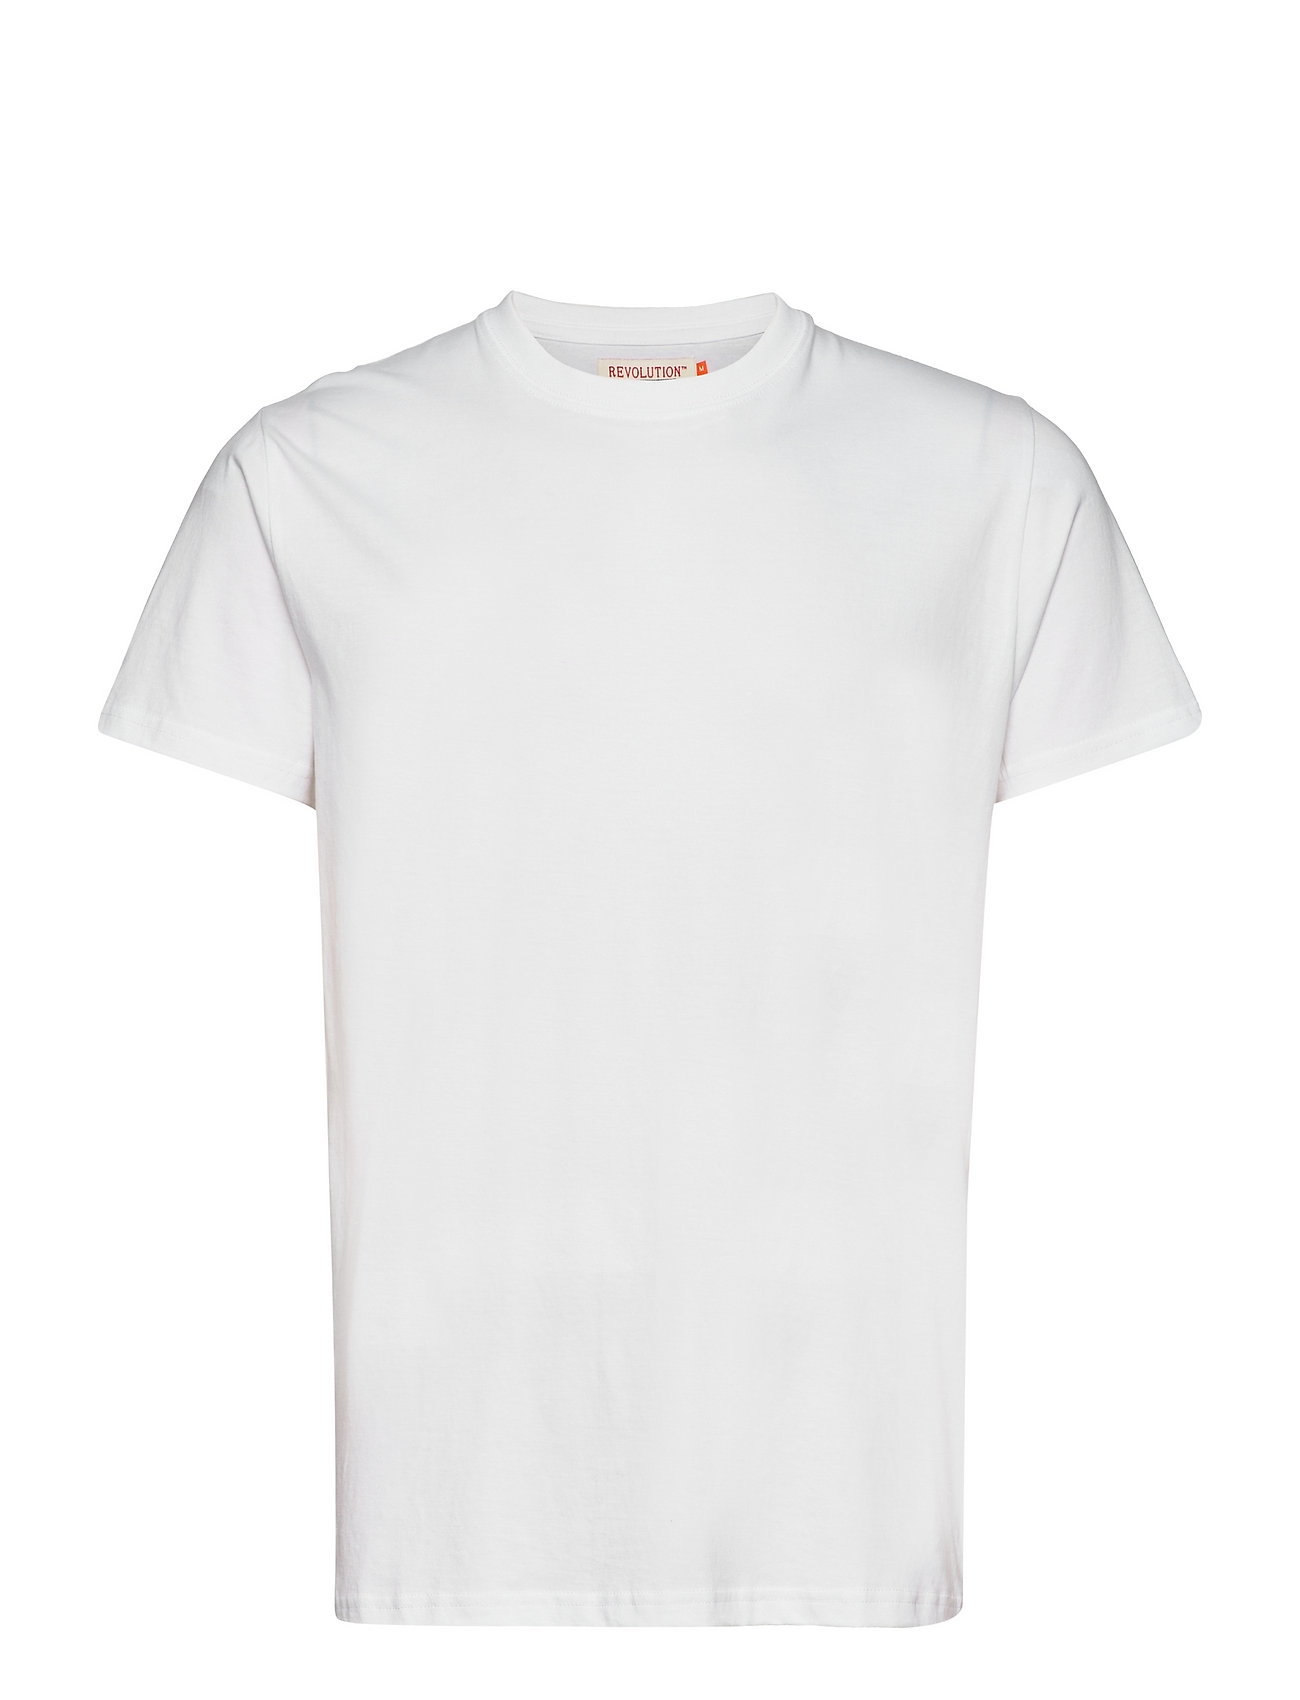 Regular Fit Round Neck T-Shirt T-shirts Short-sleeved Valkoinen Revolution